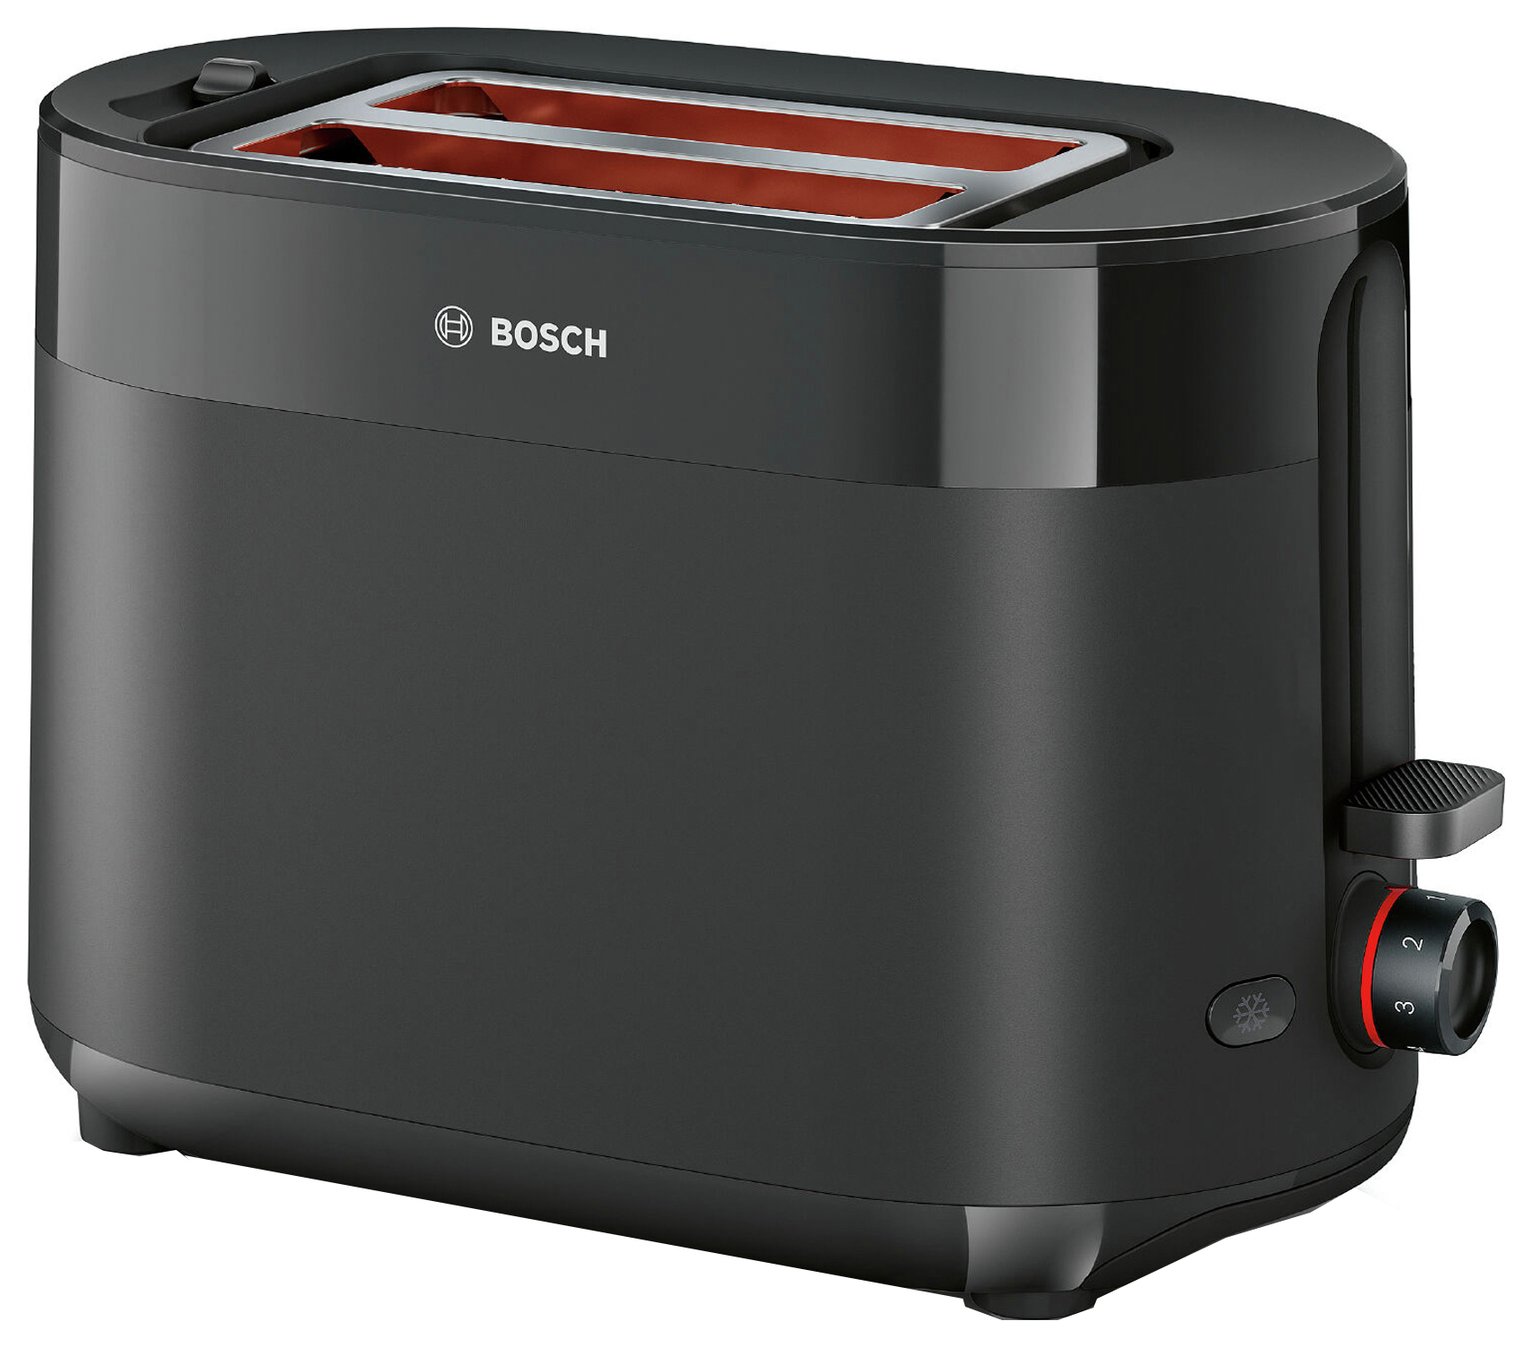 Bosch TAT2M123GB MyMoment Delight 2 Slice Toaster - Black